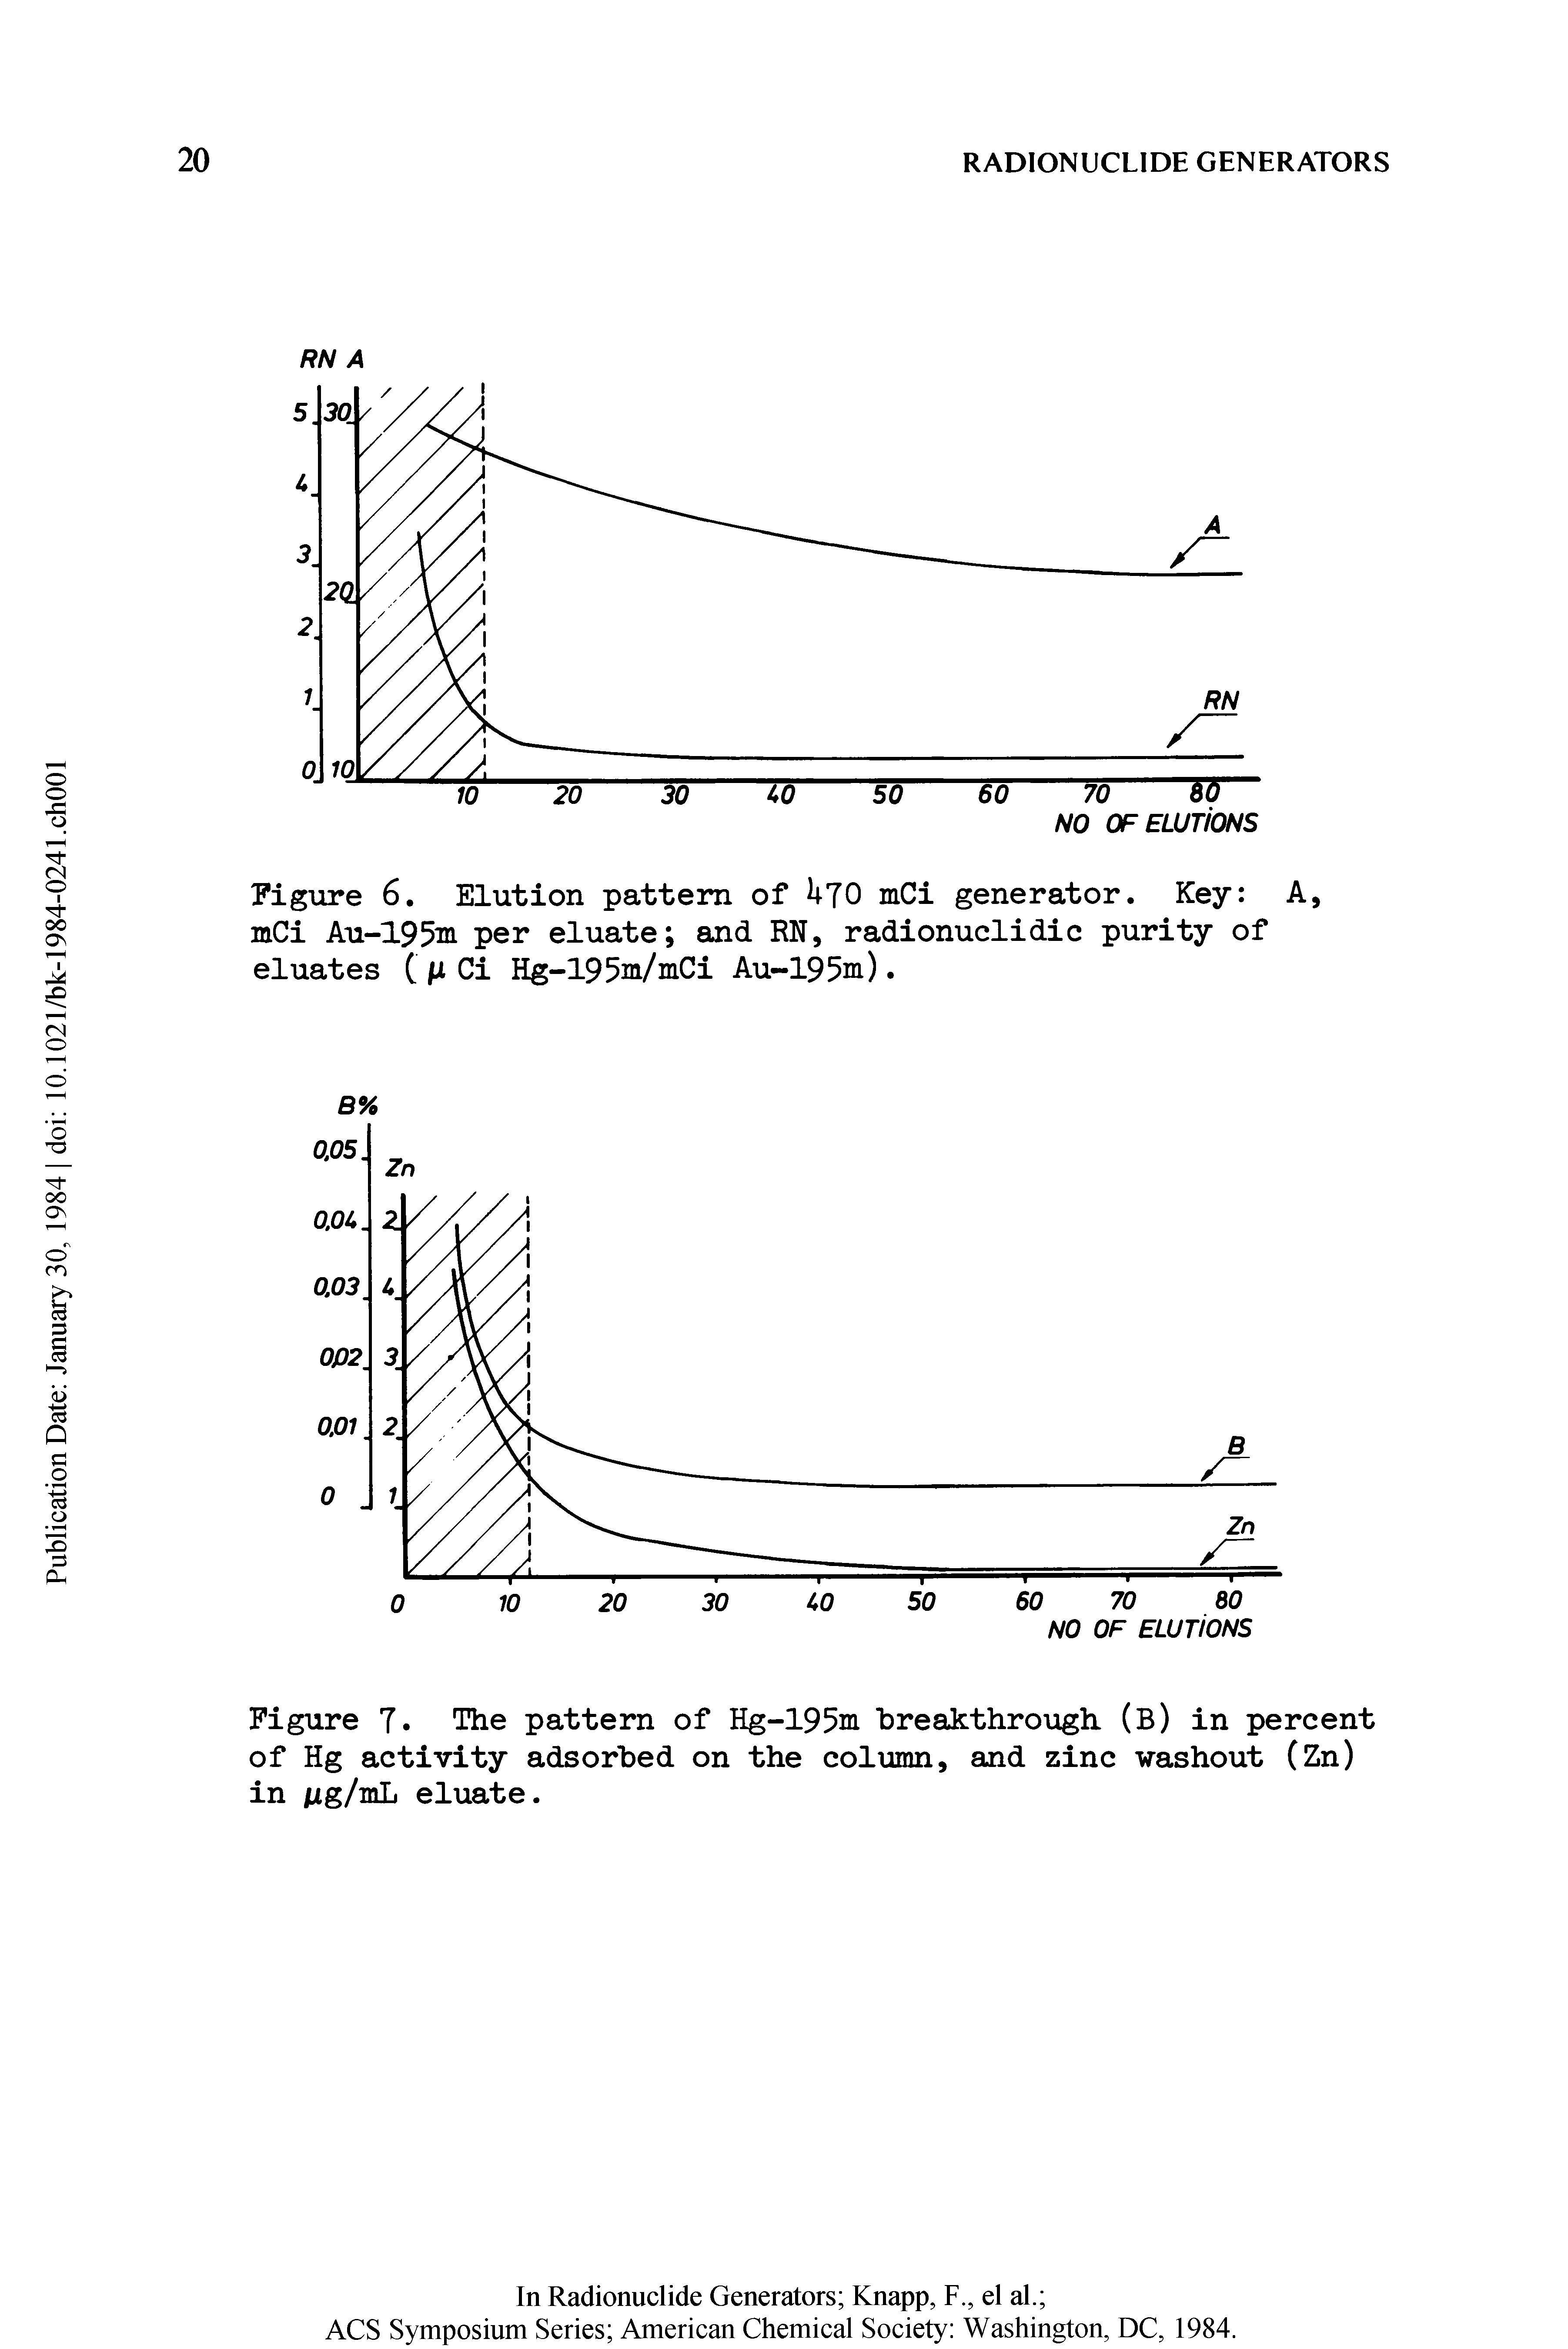 Figure 6. Elution pattern of 70 mCi generator. Key A, mCi Au-195in per eluate and RN, radionuclidic purity of eluates ( /1 Ci Hg-195m/mCi Au-195m).